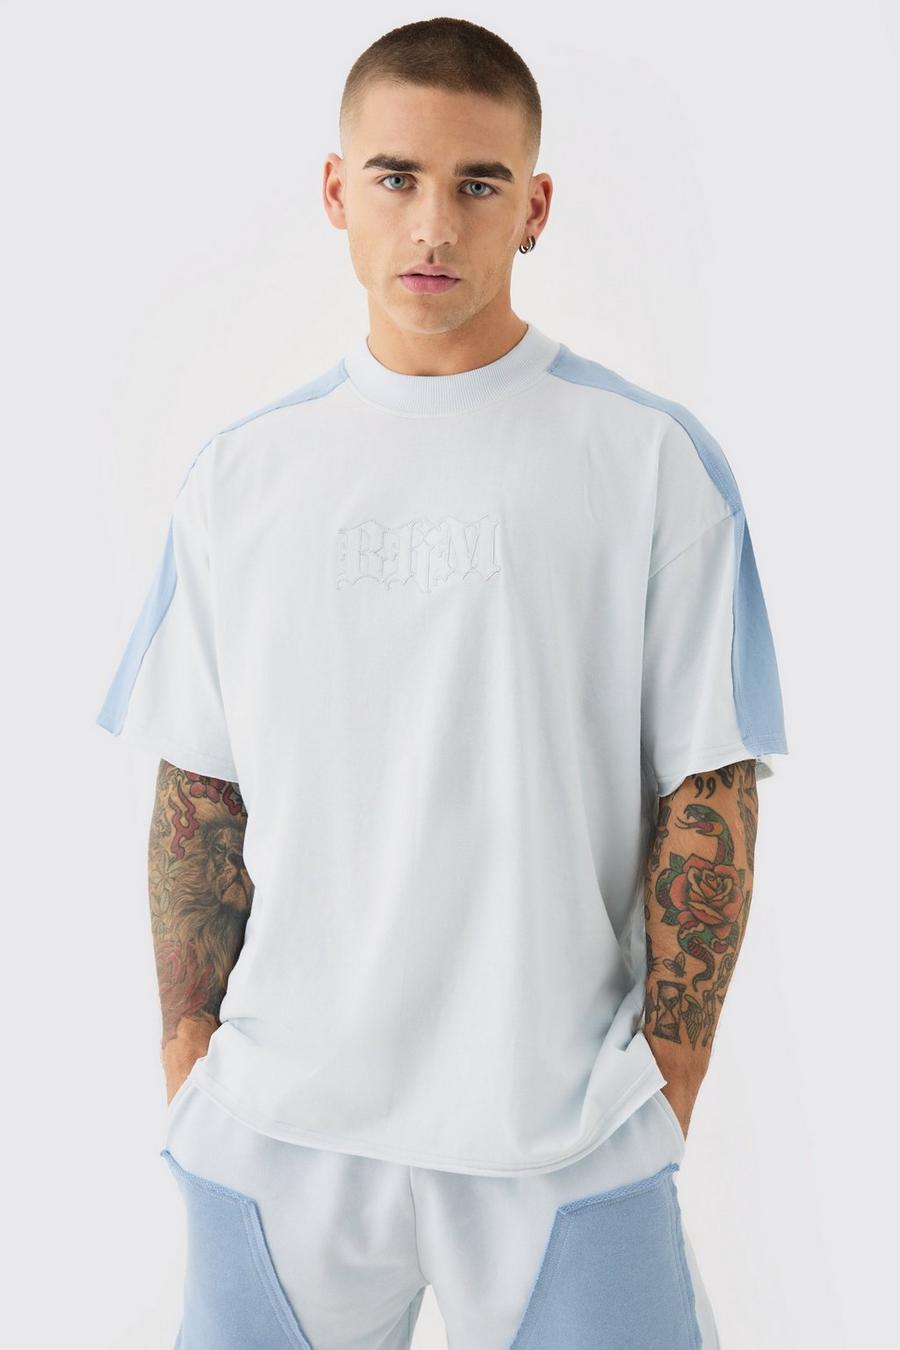 T-shirt oversize con applique di lettere gotiche e lettere Bm, Light blue